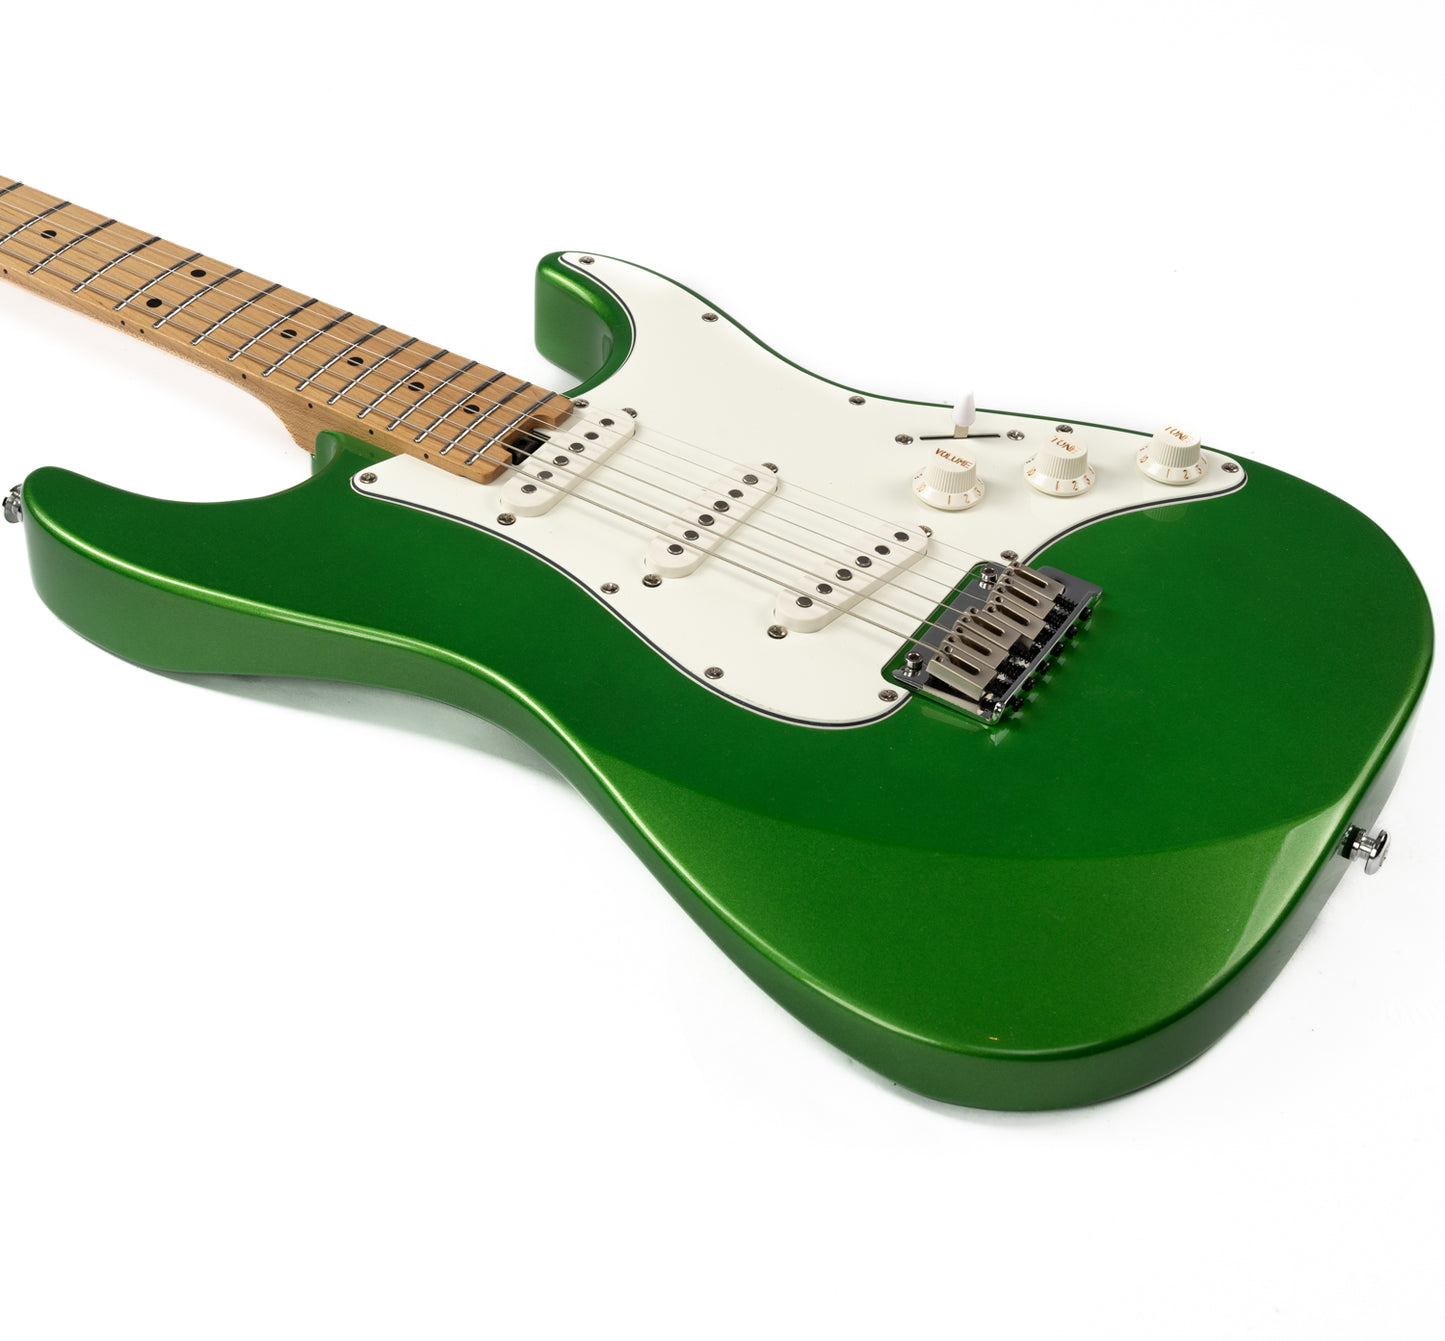 Eart Guitars, NK-VS60, 2-Point Synchronized Tremolo Bridge Alnico V Pickups Classic Electric Guitars, Pearl green